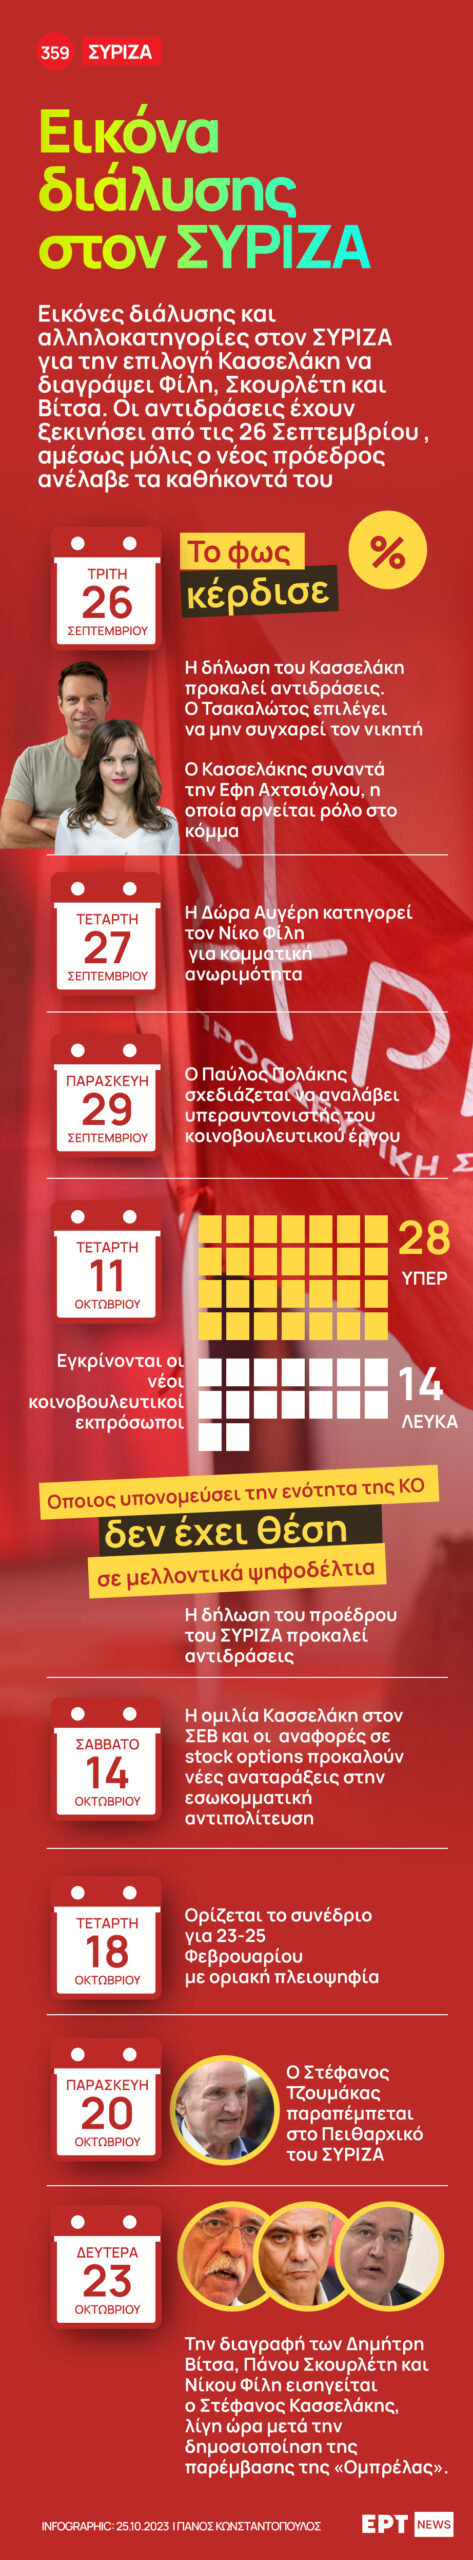 Infographic: Εικόνα διάλυσης στον ΣΥΡΙΖΑ – Το χρονικό των εξελίξεων του τελευταίου μήνα